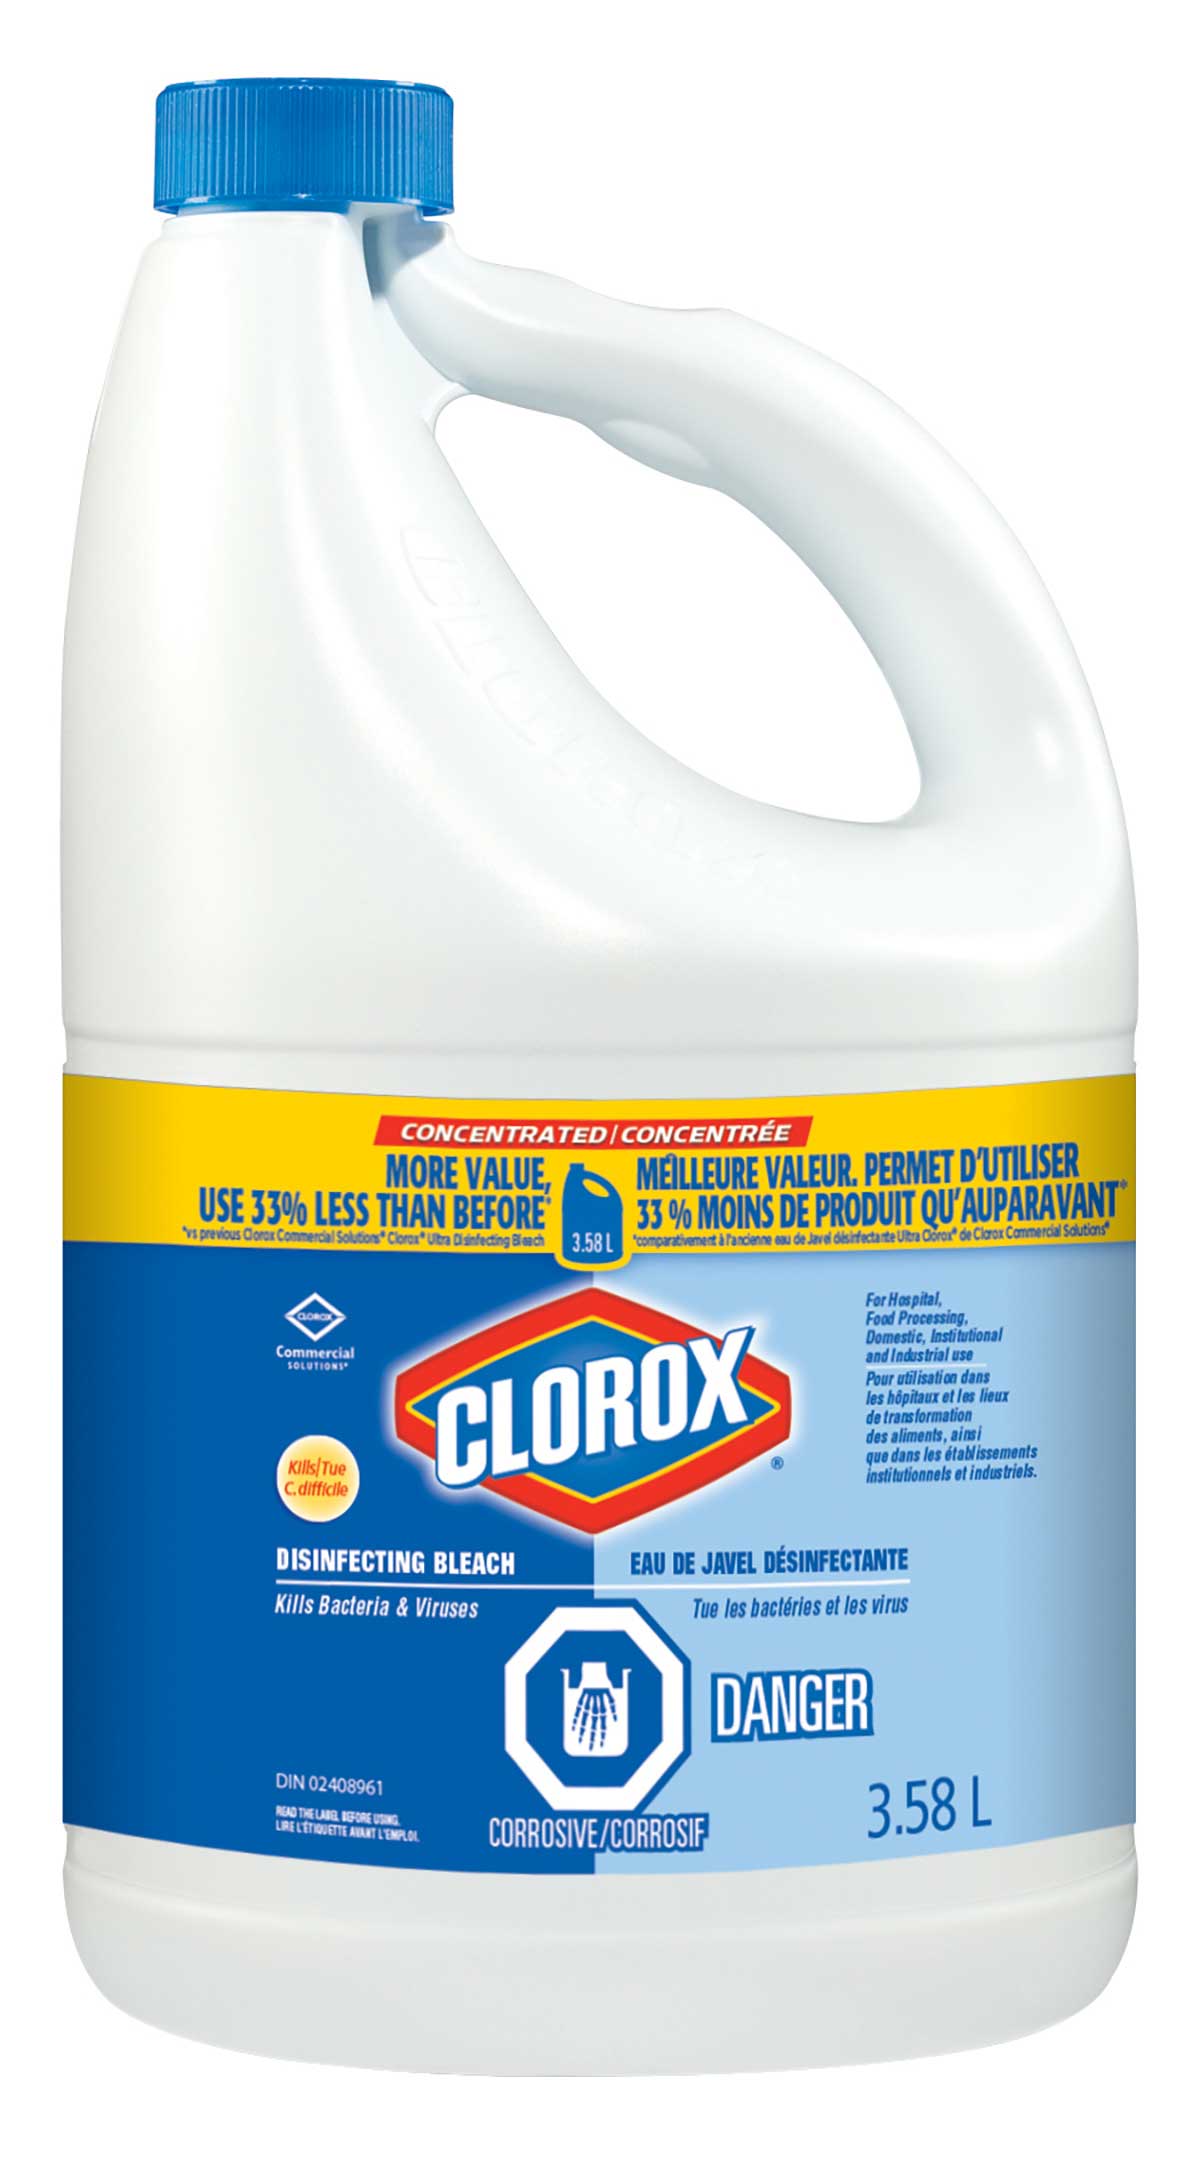 CLOROX DISINFECTING BLEACH 3.58L BOTTLE 7.4%